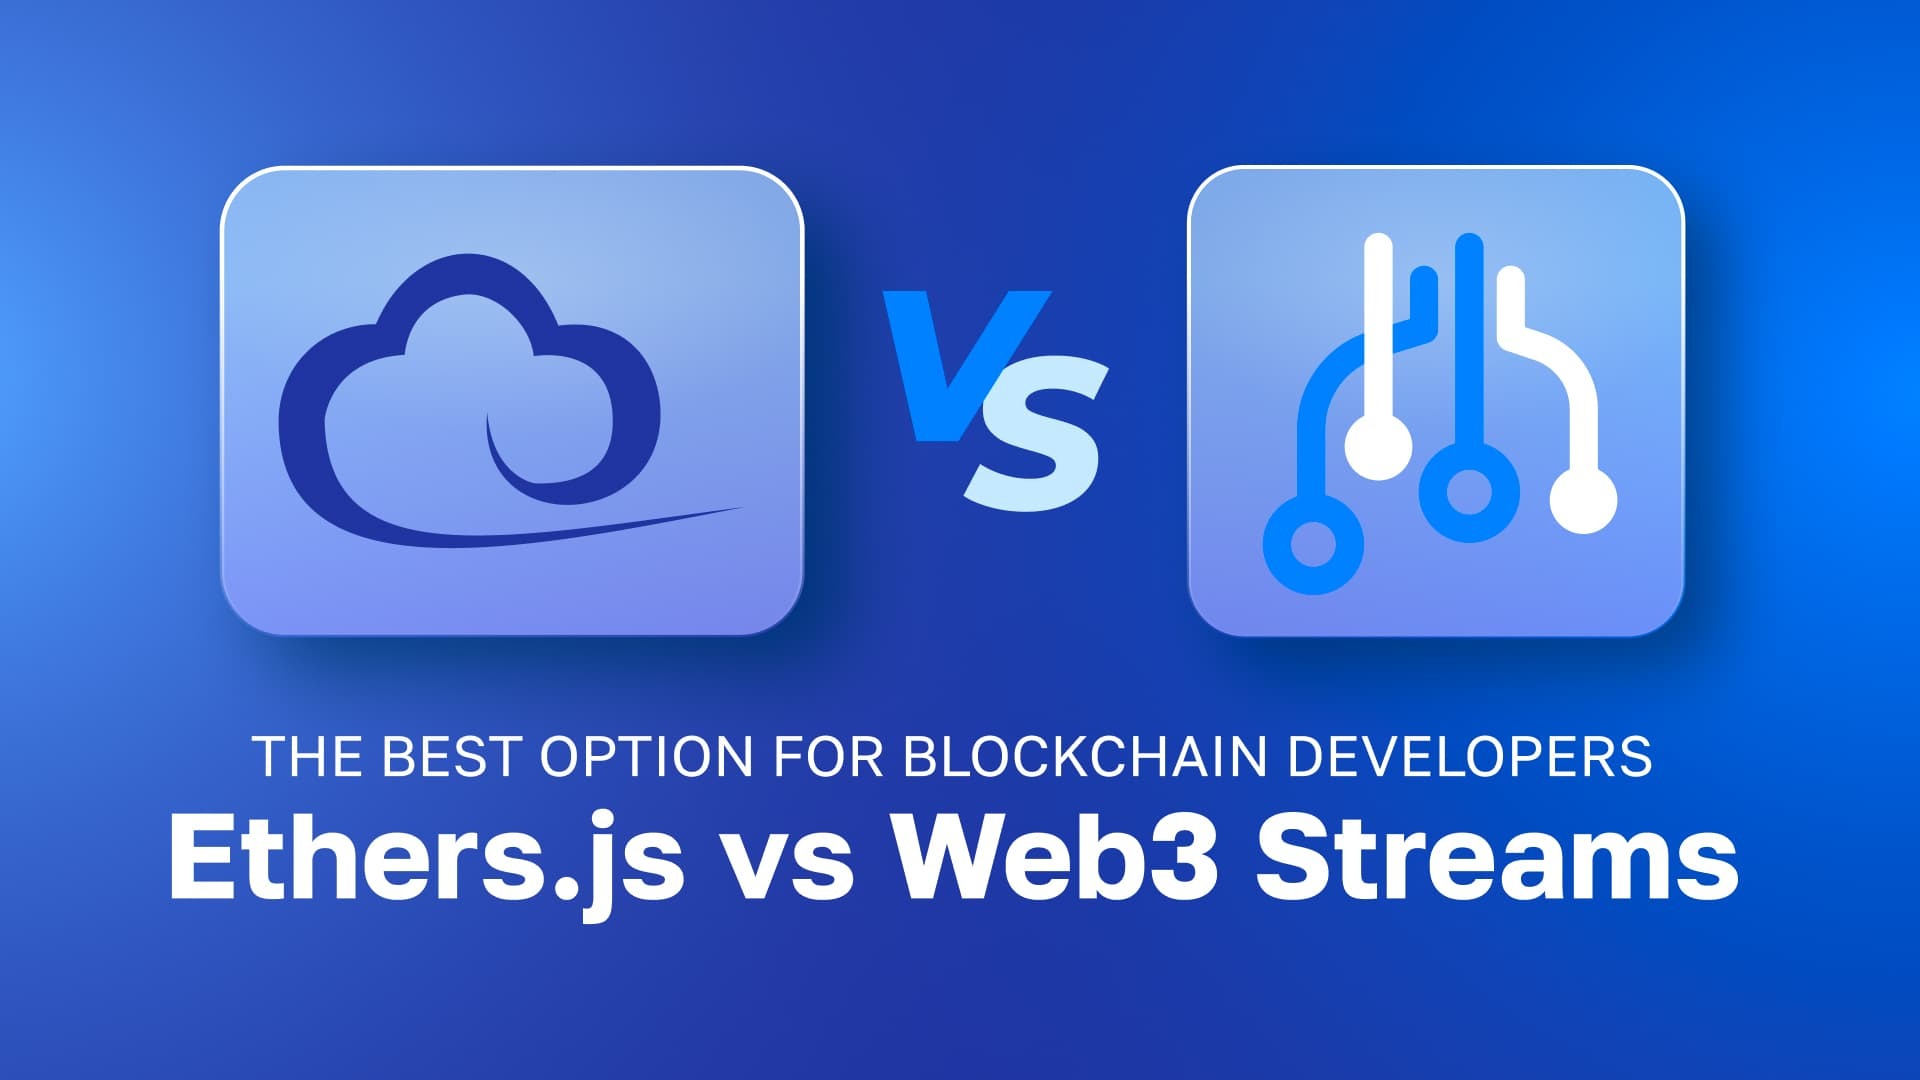 Exploring Ethers.js vs Web3 Streams - The Best Option for Blockchain Developers